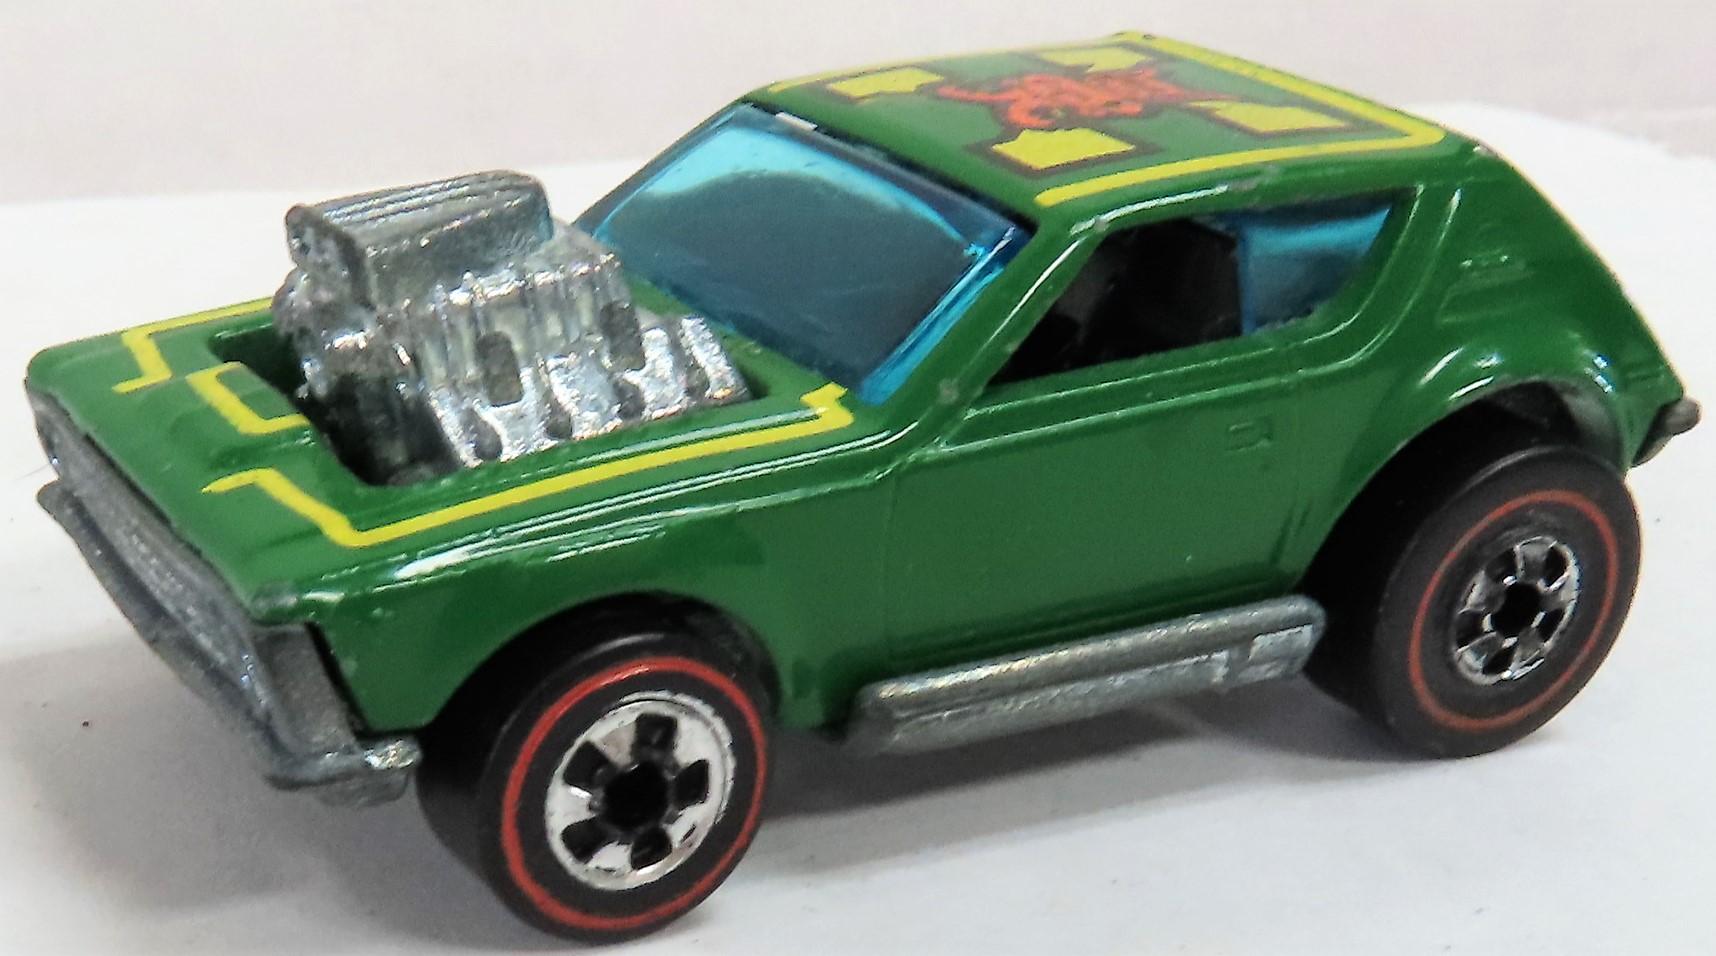 1975 (dated 1974) Hot Wheels Redline Gremlin Grinder, With Tampo Design! no licenese plate version